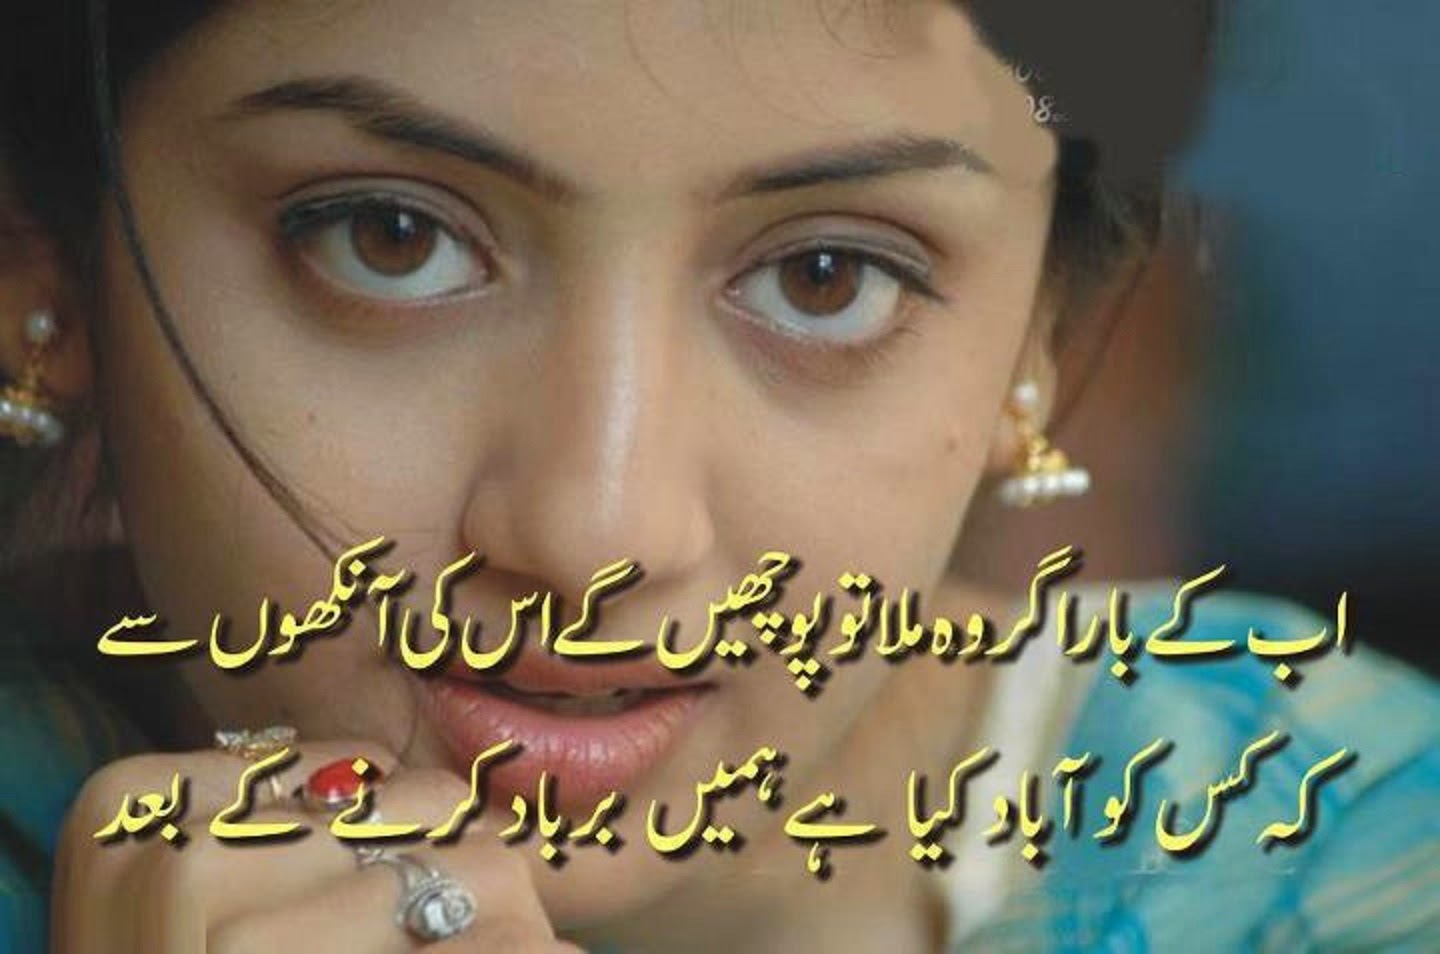 3D Beautiful Sad Urdu Poetry Wallpapers Free Download